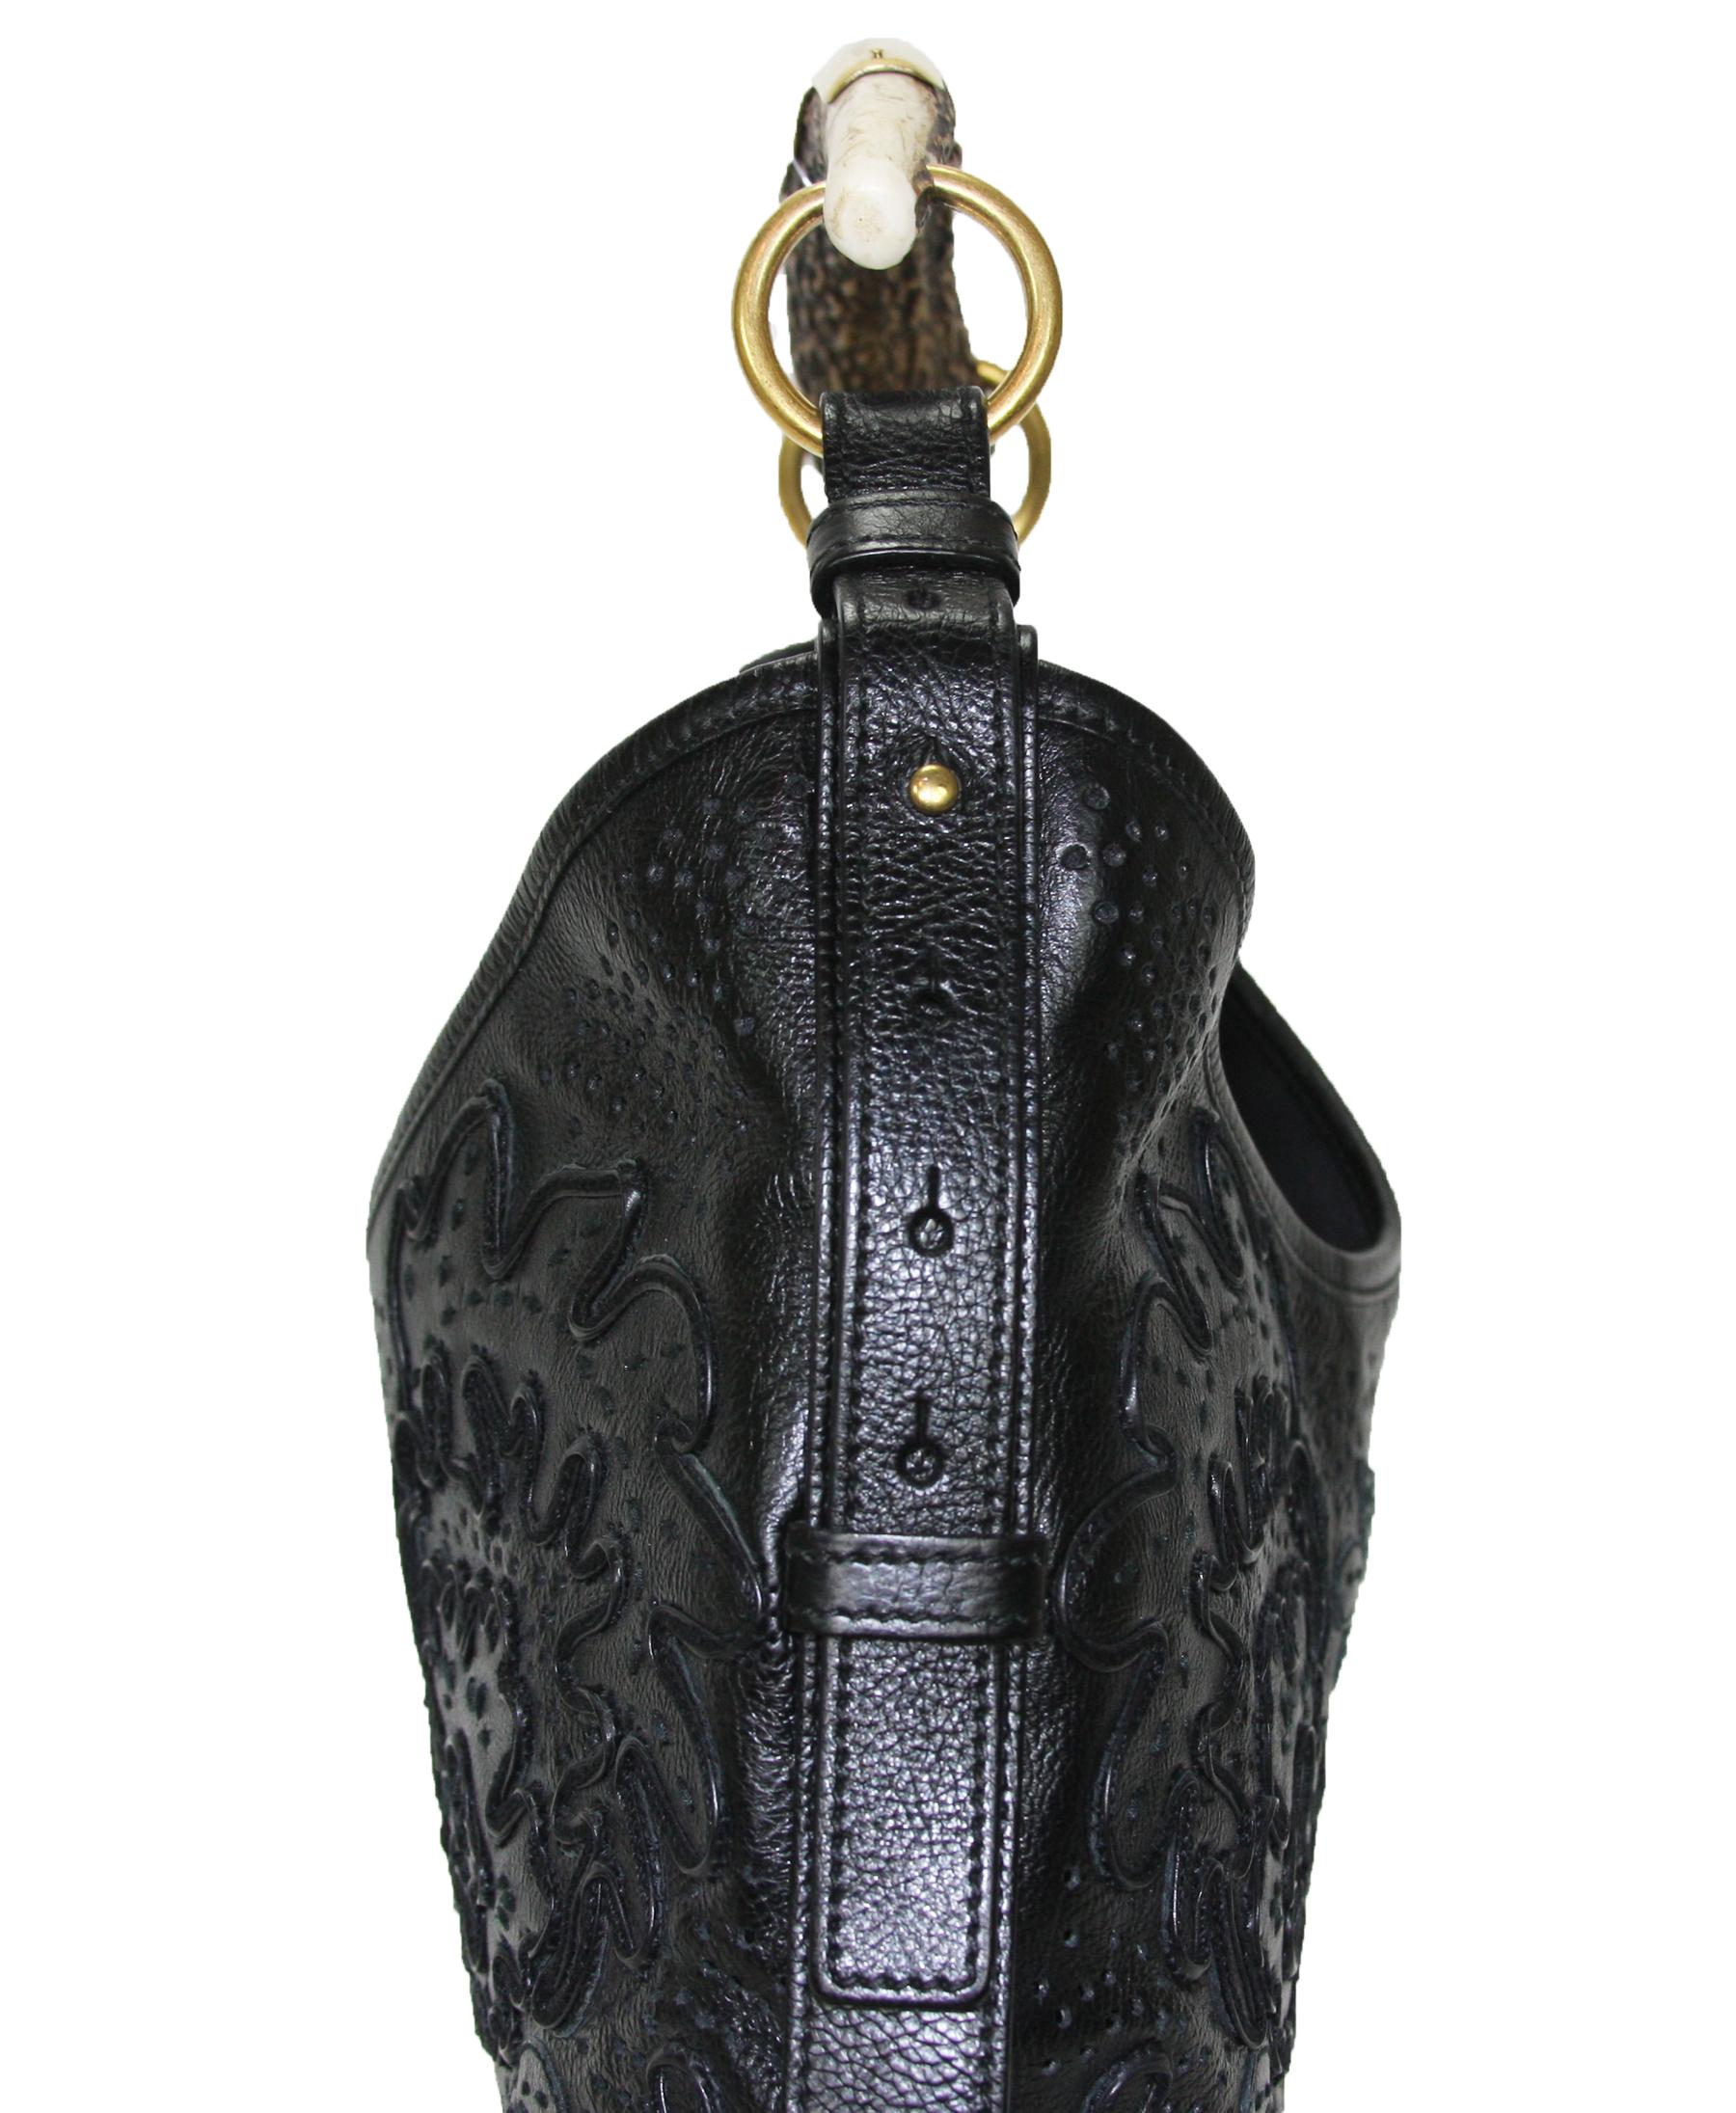 Women's Iconic Tom Ford for Yves Saint Laurent Mombasa Black Embellished Leather Bag